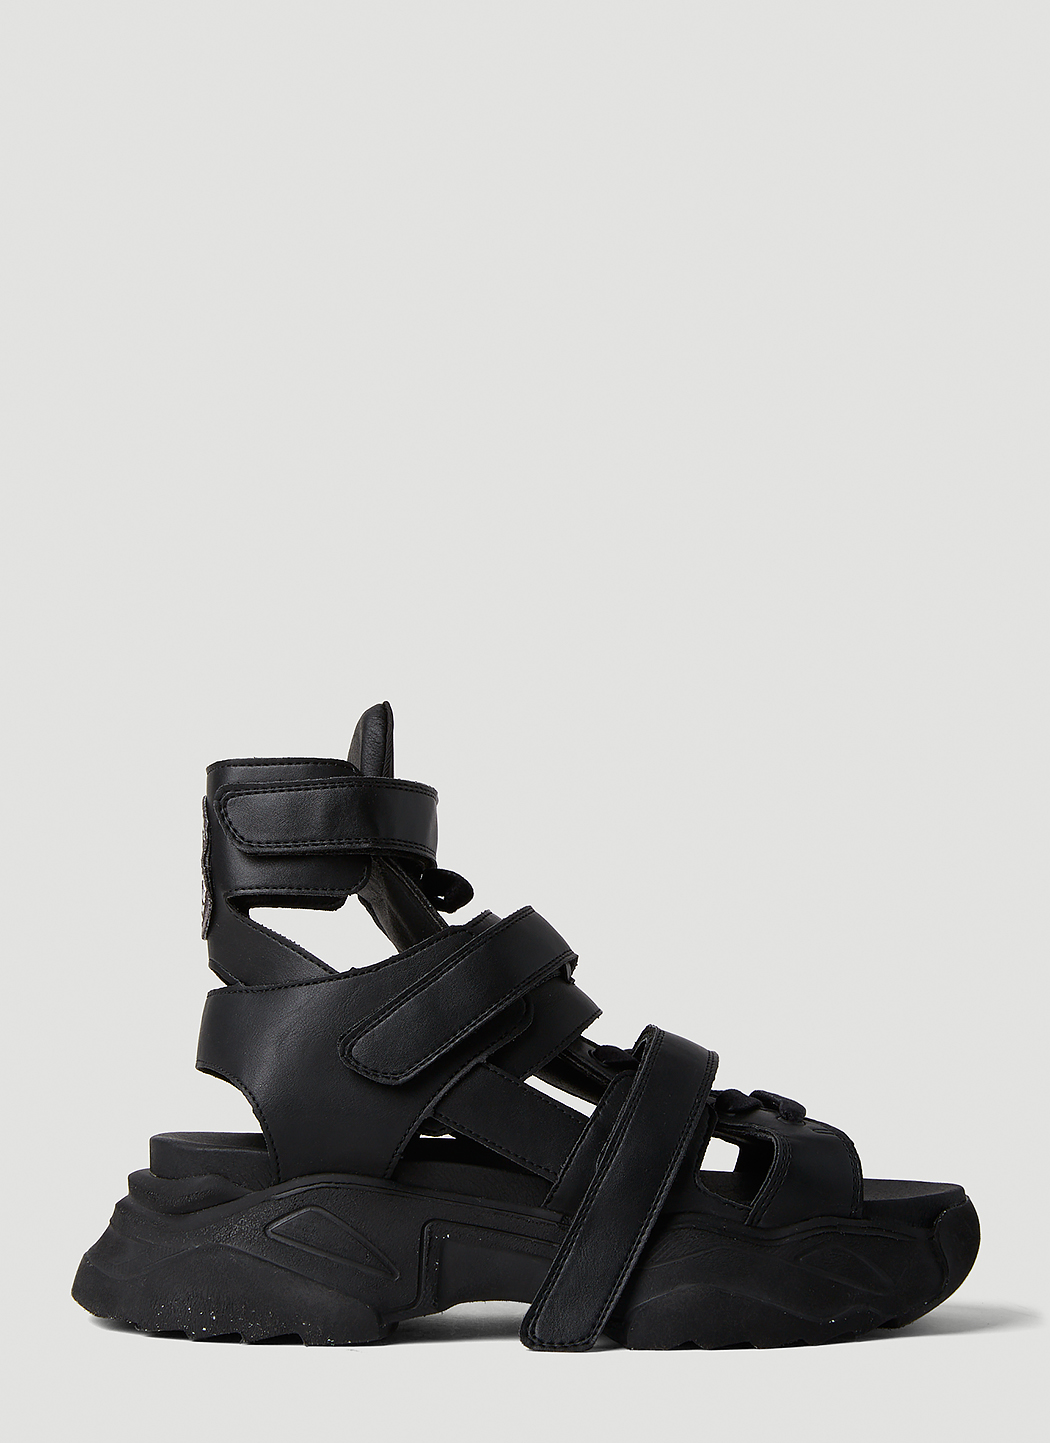 Vivienne Westwood Romper Sandals in Black | LN-CC®